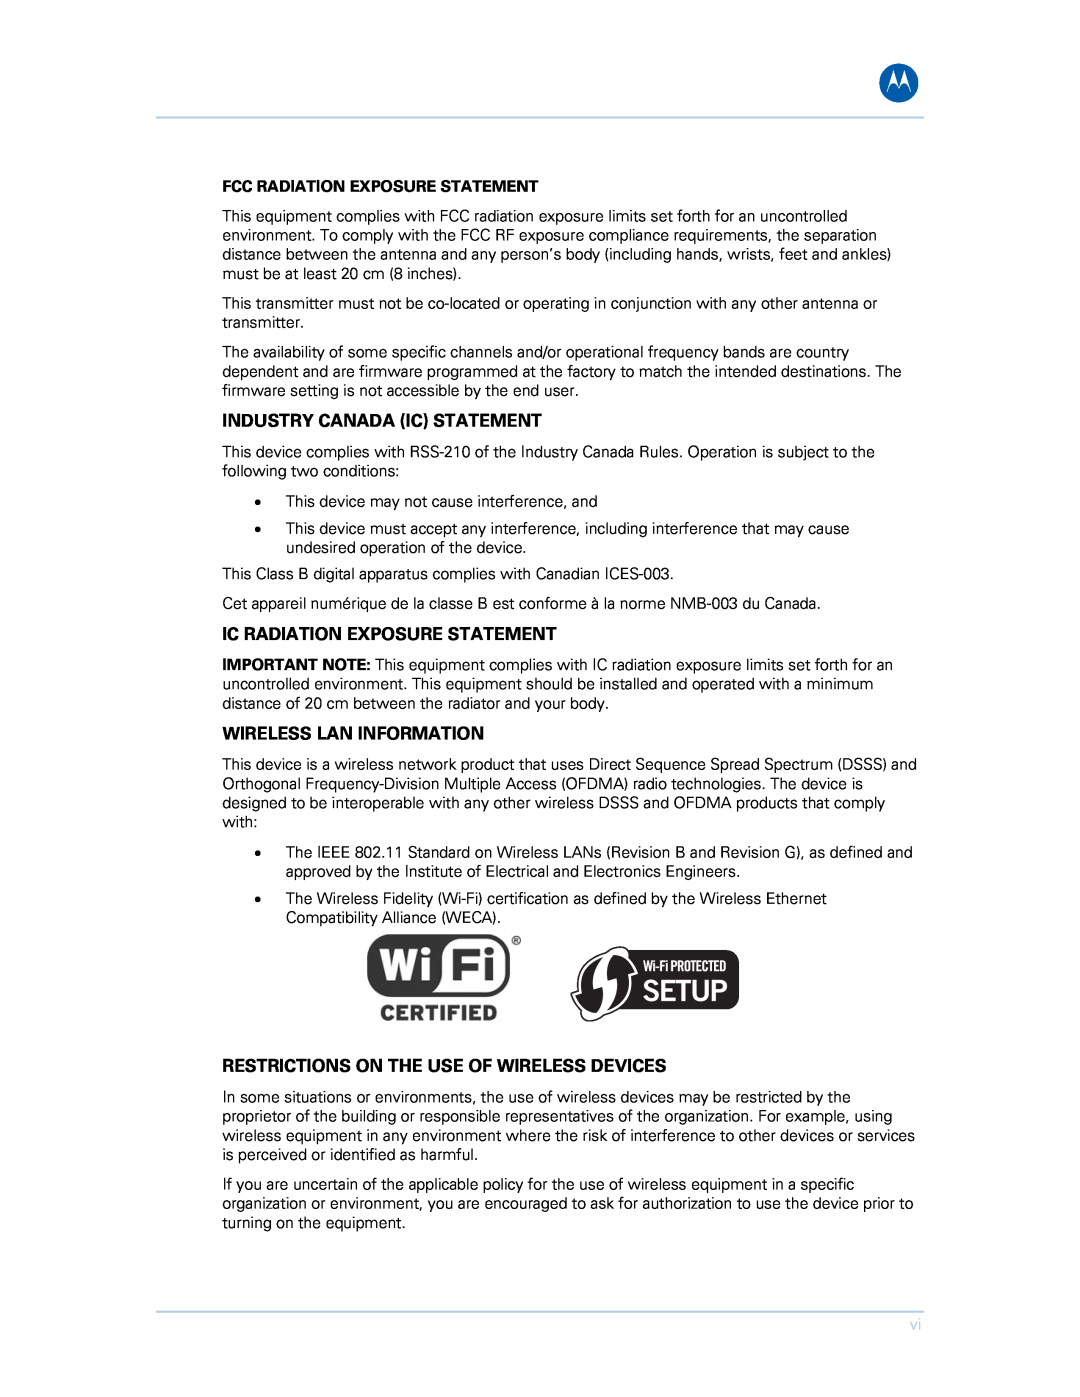 Motorola SVG1501UE, SVG1501E manual Industry Canada Ic Statement, Ic Radiation Exposure Statement, Wireless Lan Information 